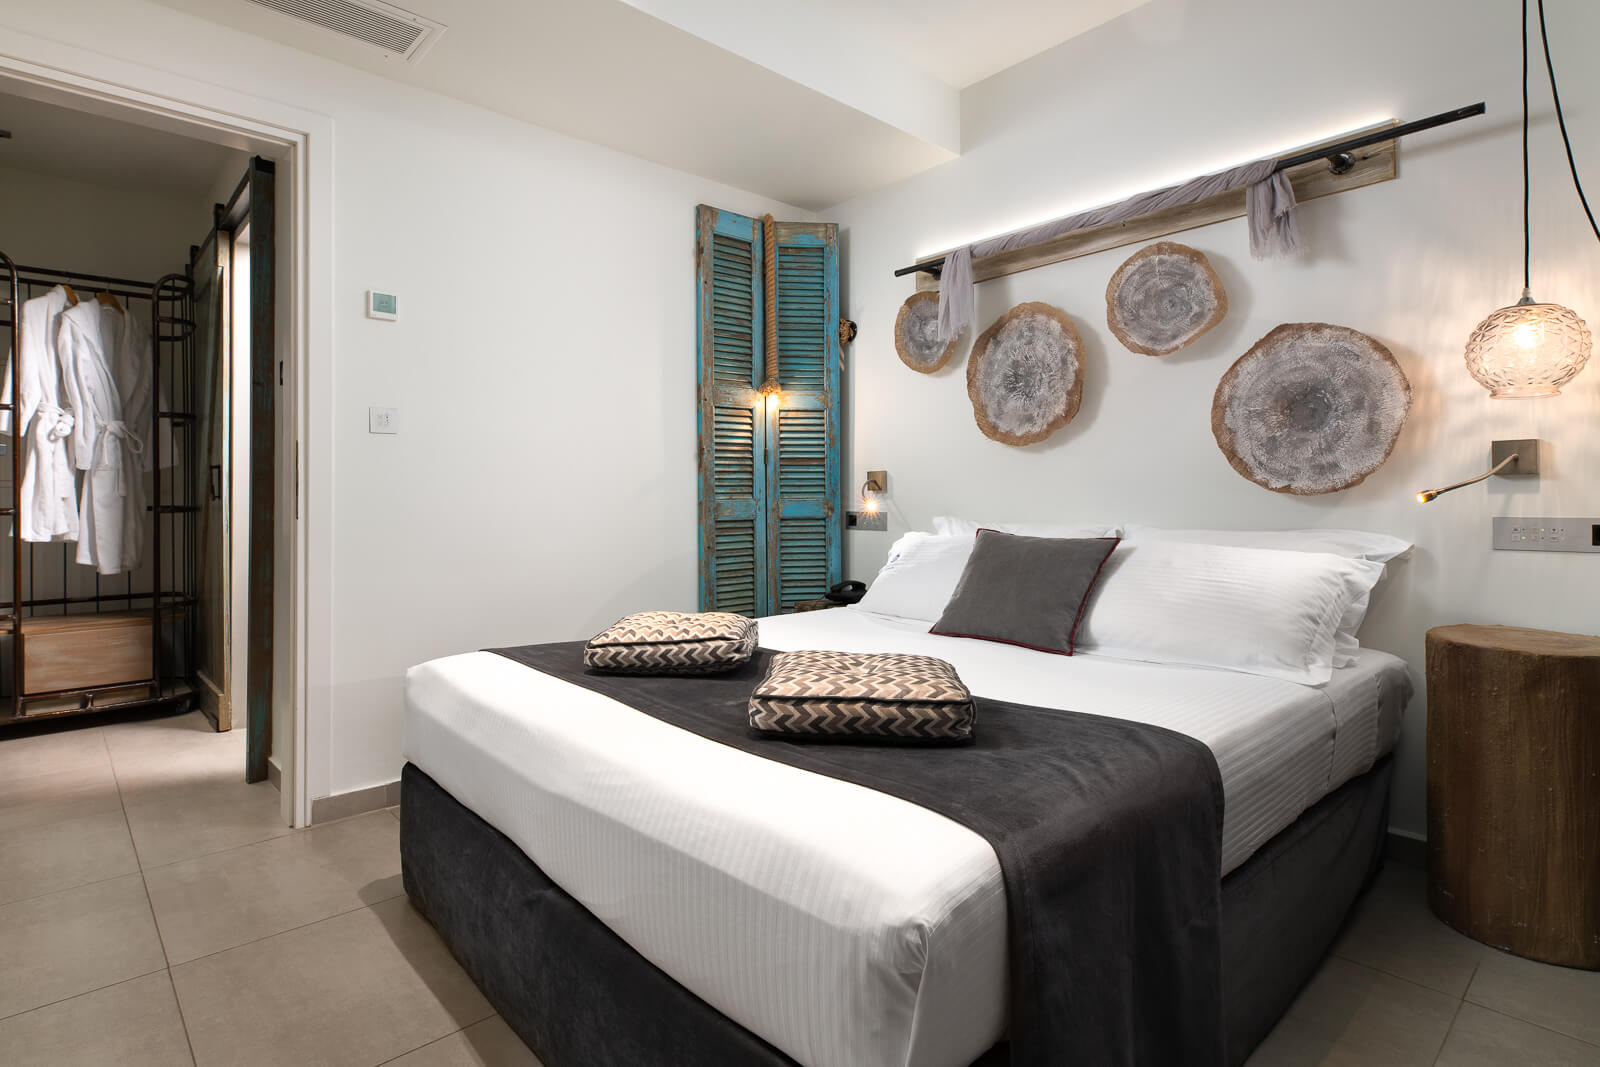 Iviskos Hotel Suite - Elakati Hotel in Rhodes